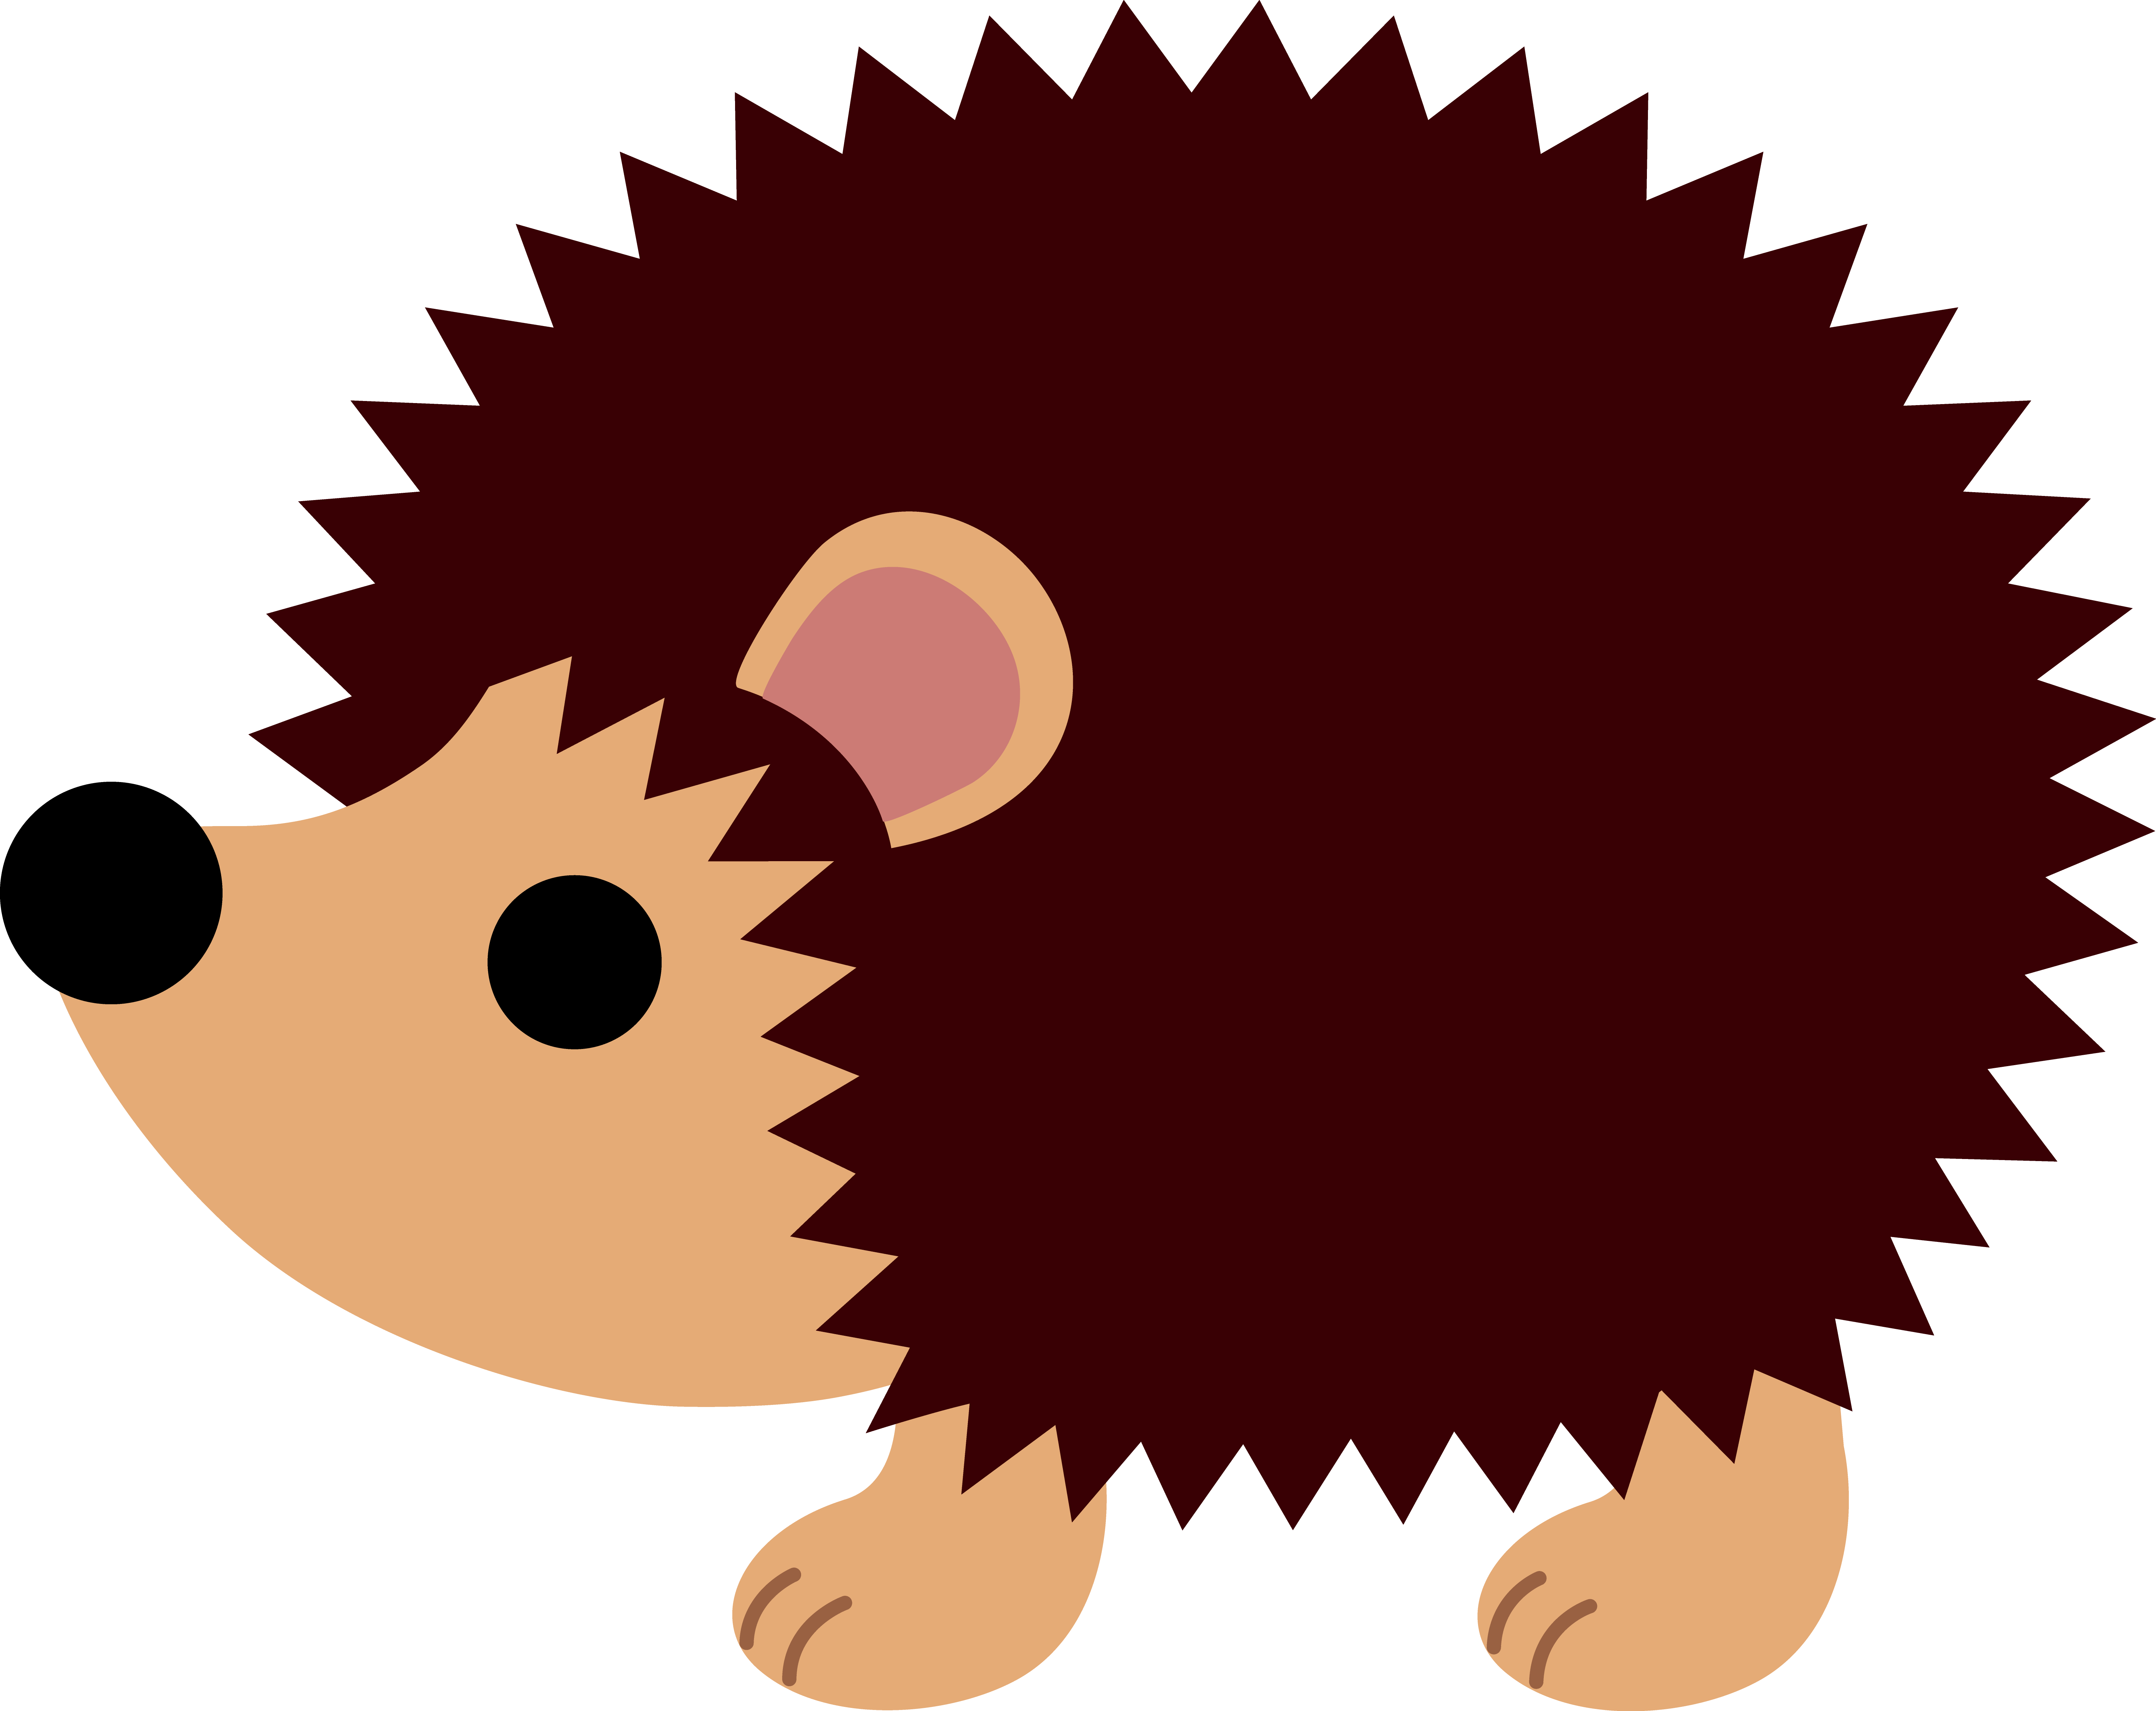 Free Hedgehog Outline Cliparts, Download Free Hedgehog Outline Cliparts